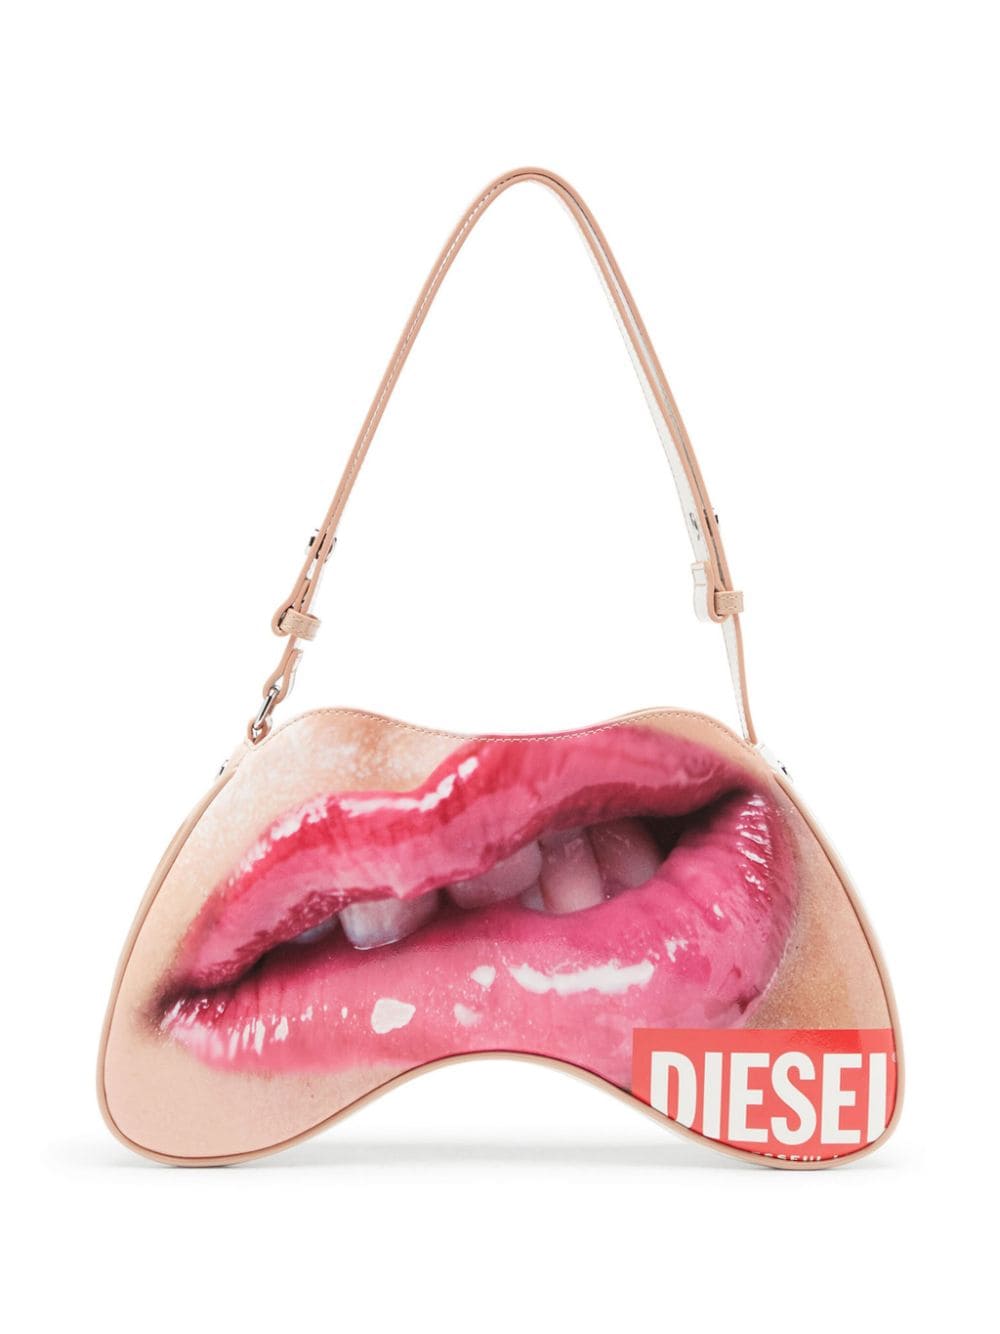 Diesel Play schoudertas met lippen patroon - Beige